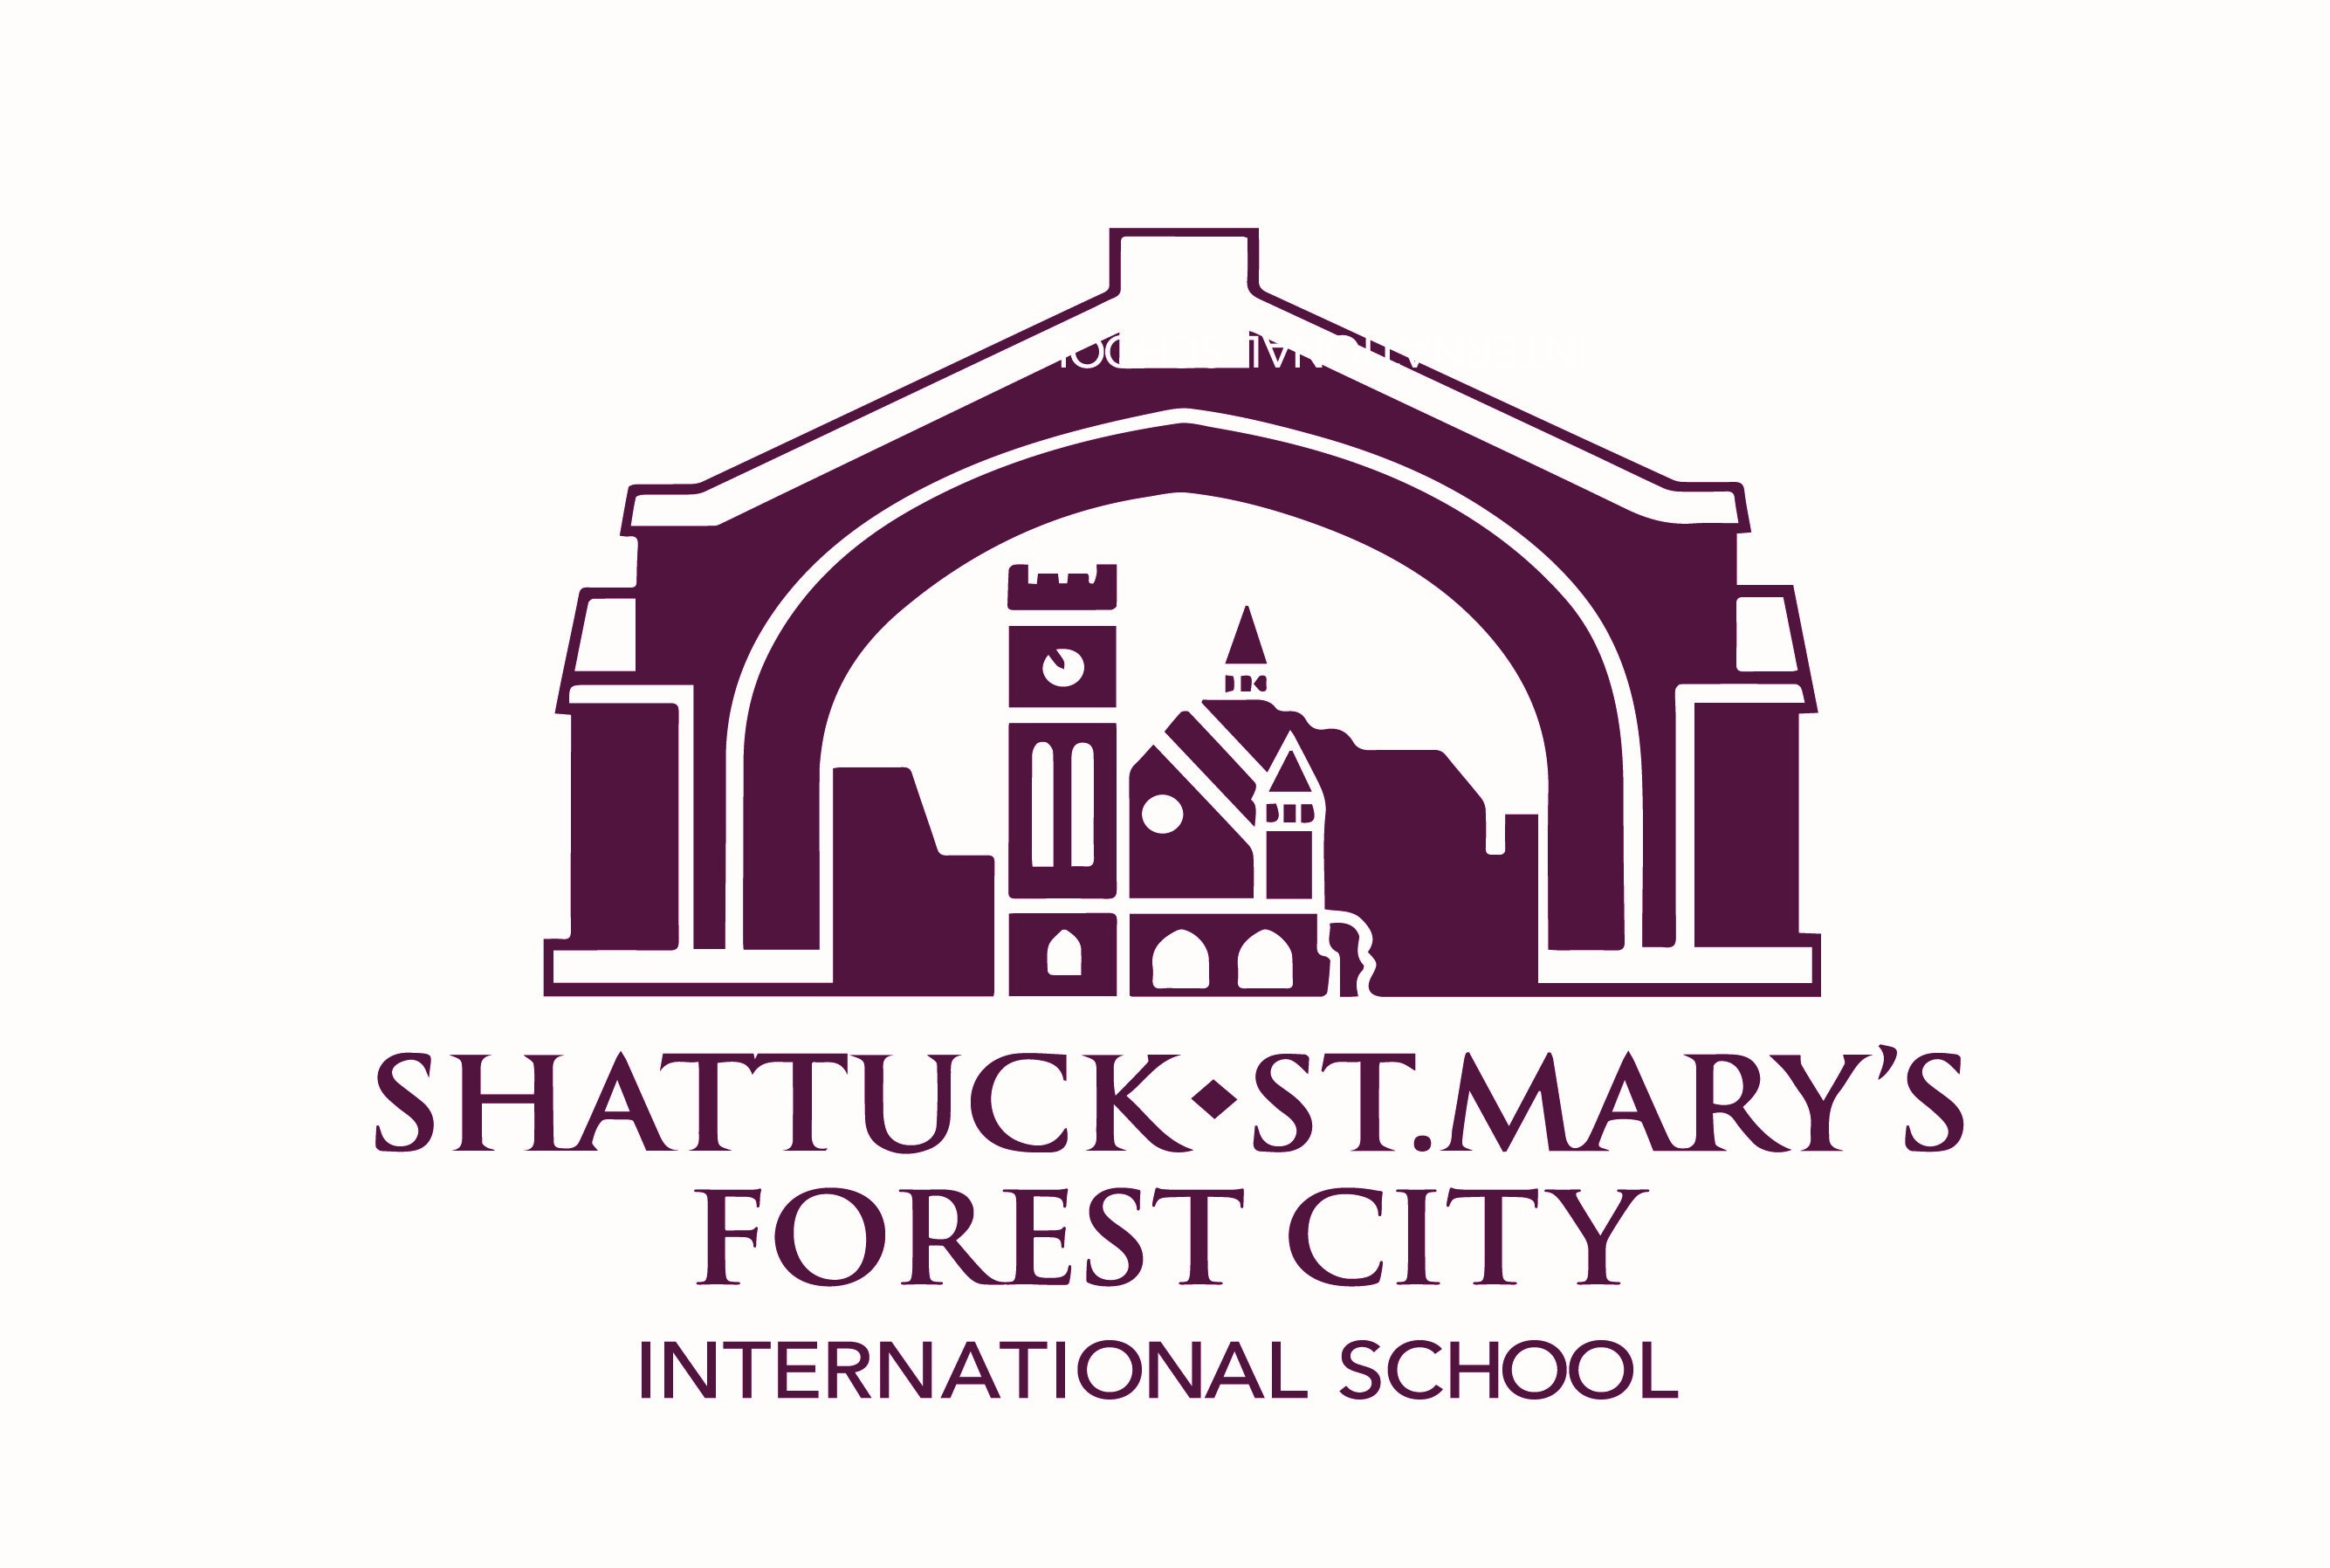 Shattuck St. Mary's Forest City International School